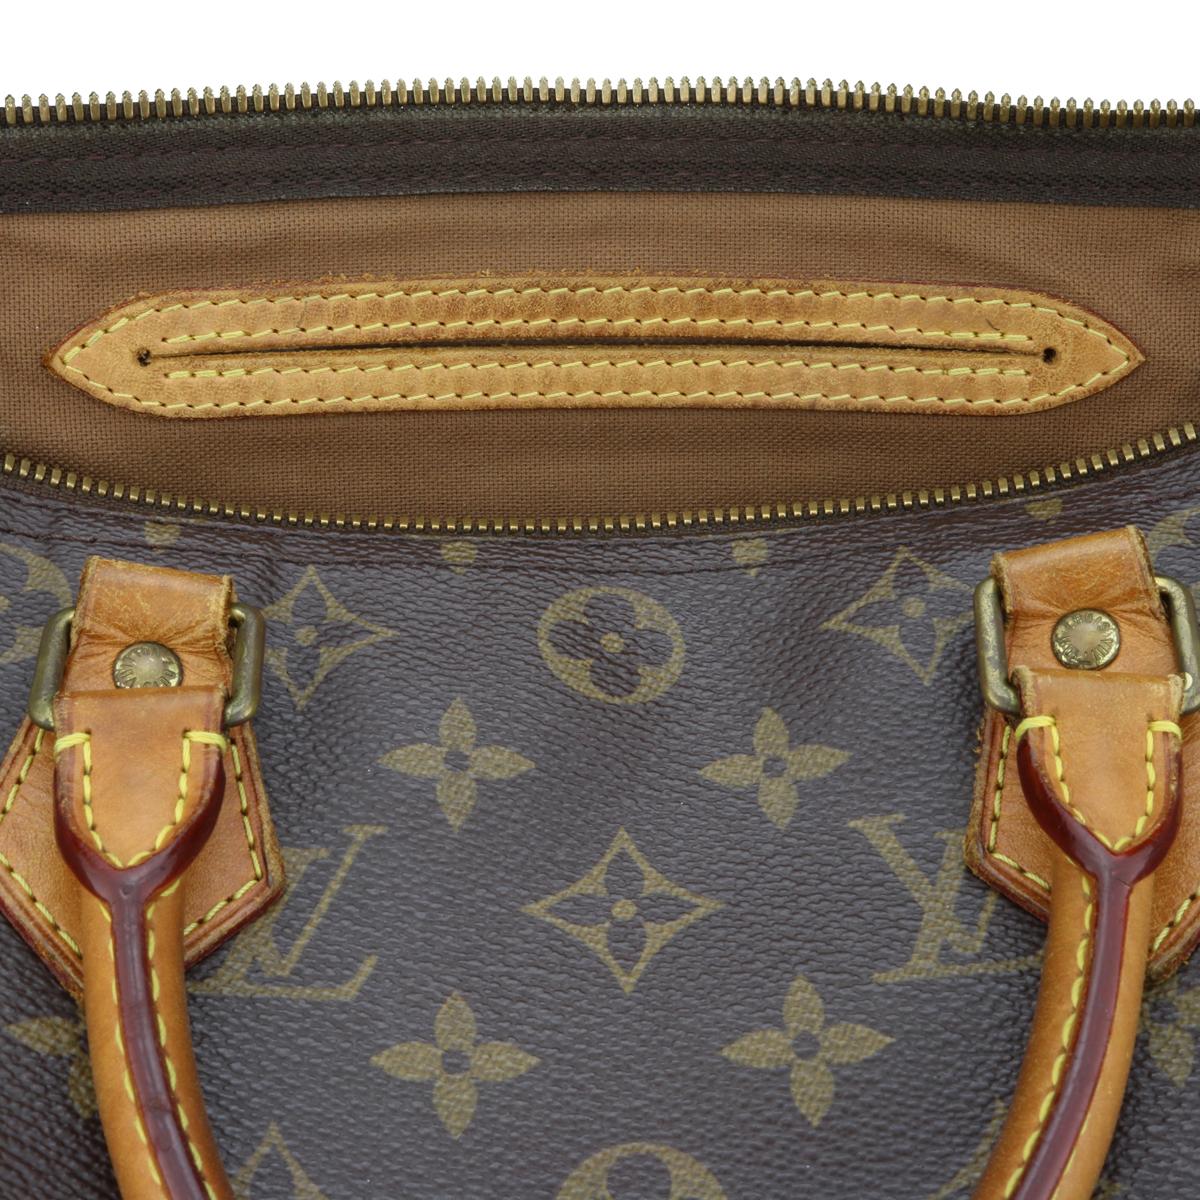 Louis Vuitton Speedy Bandoulière 30 Bag in Monogram 2013 14